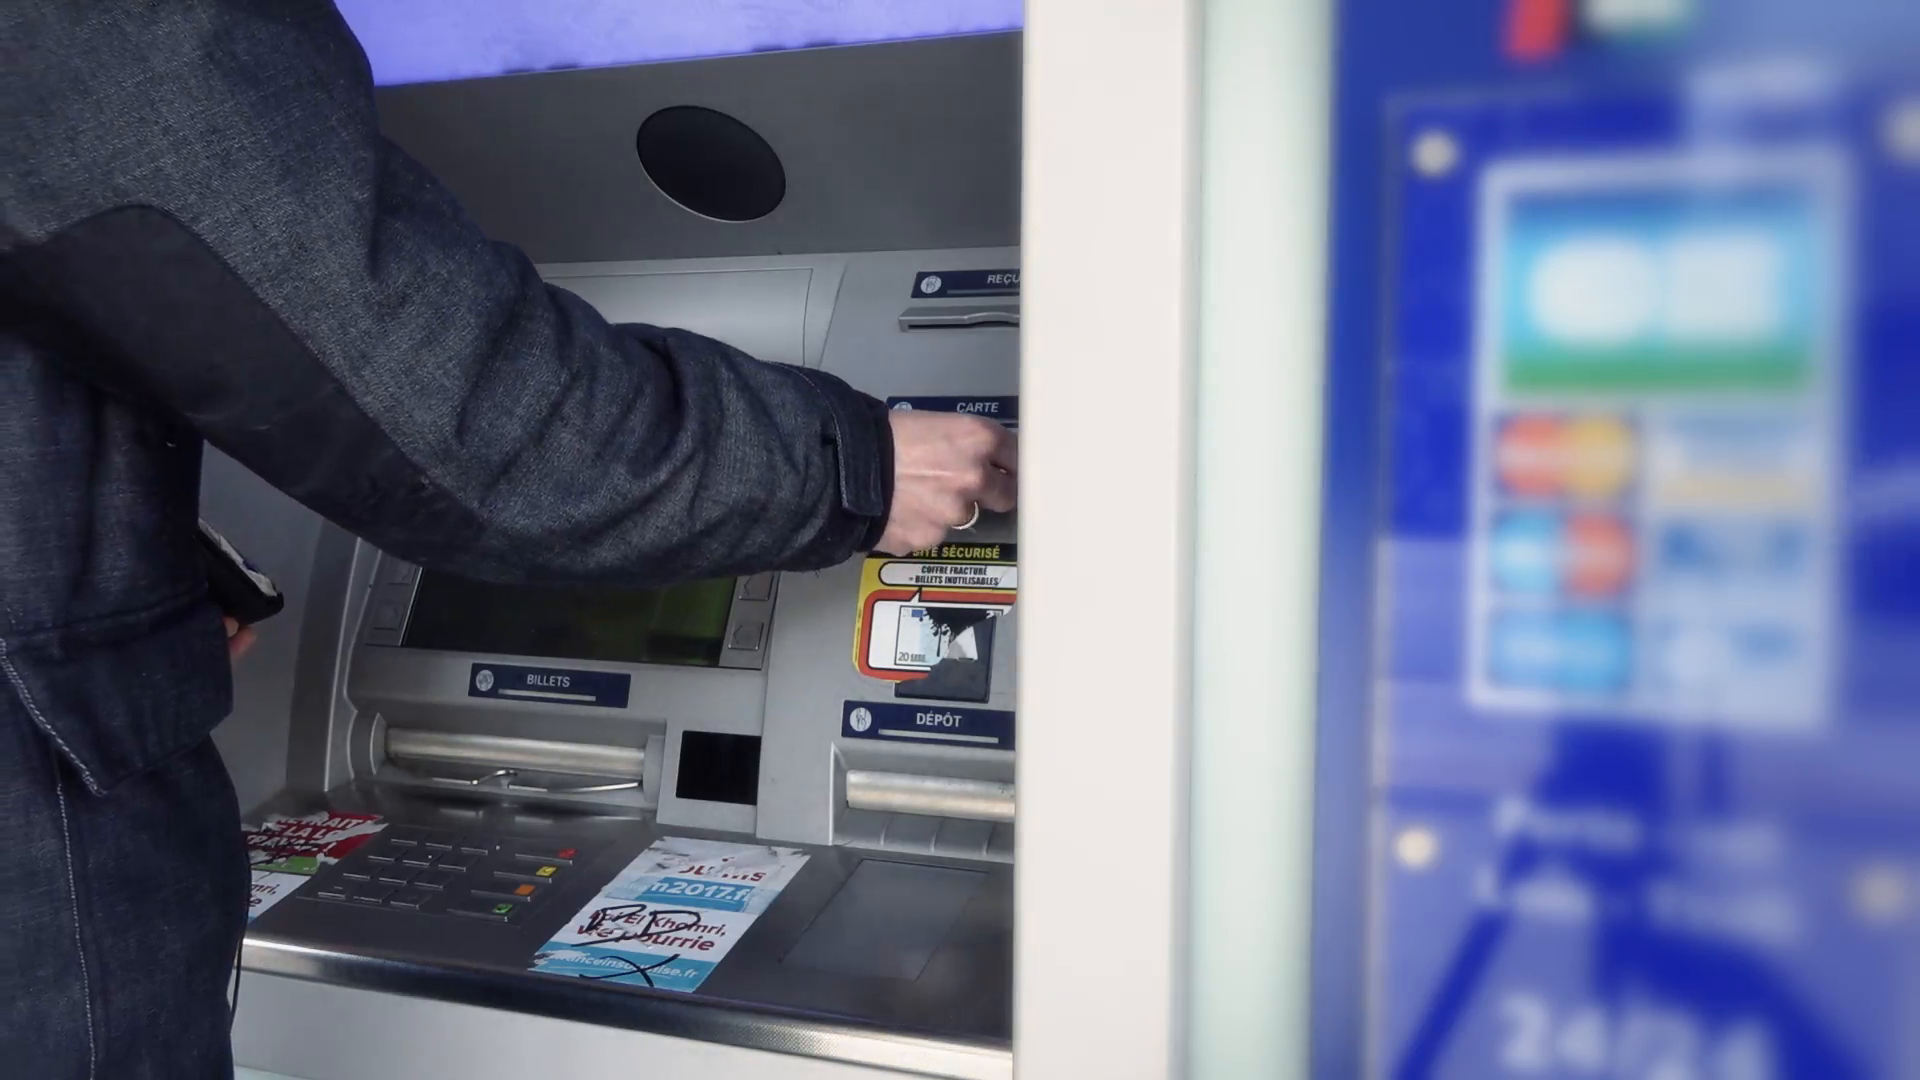 Simulation ATM machine, Atm F